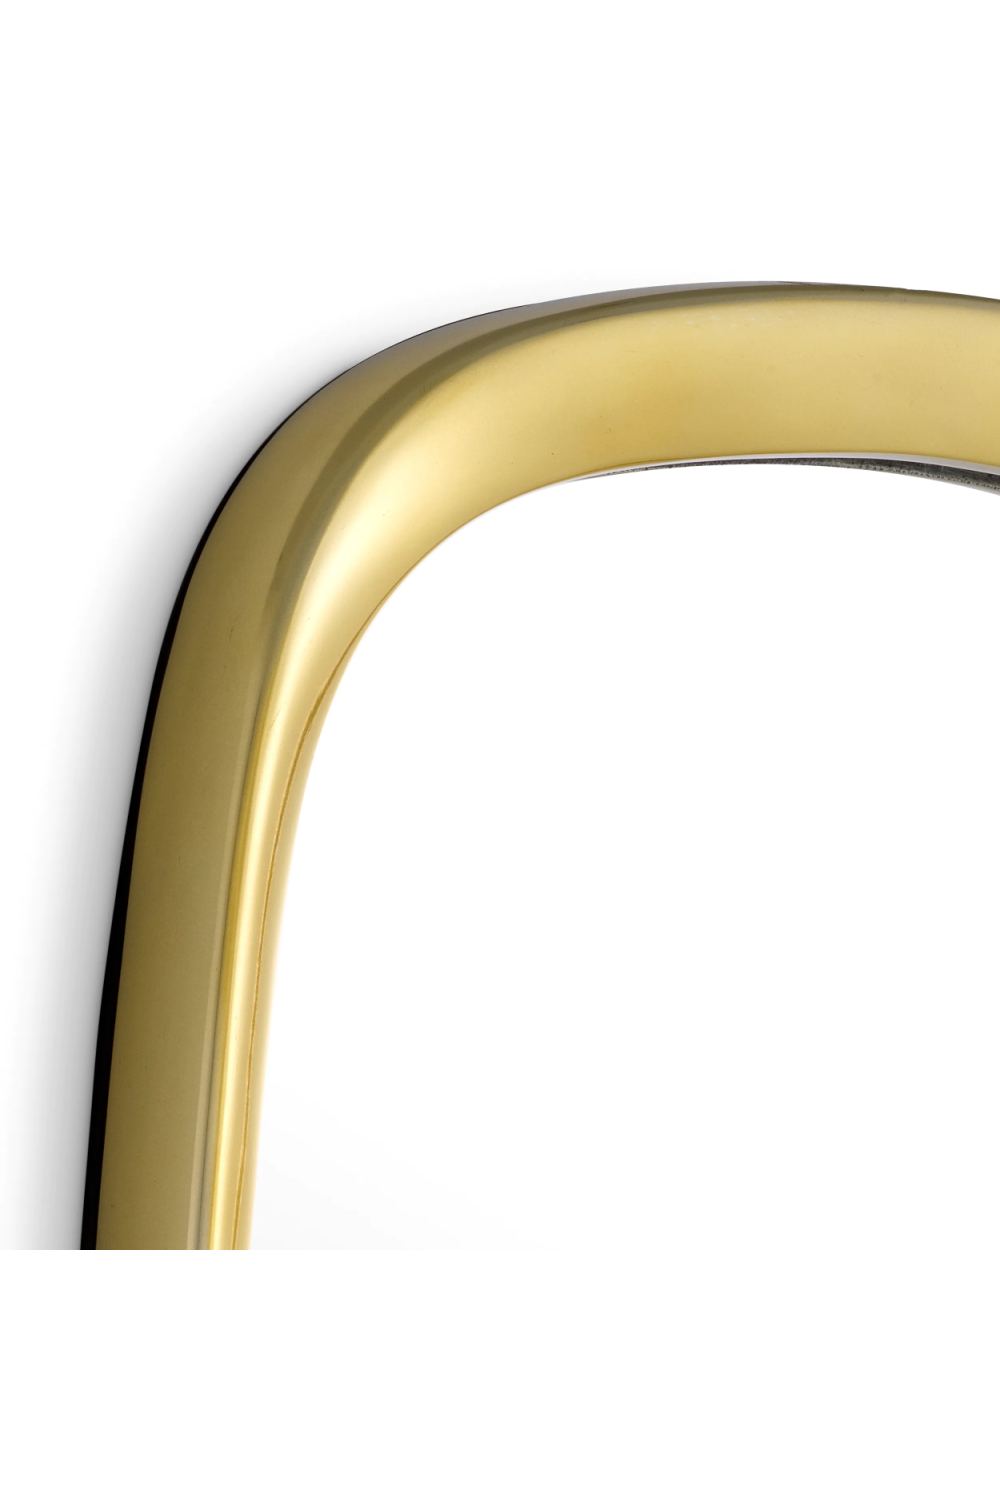 Gold Framed Free-Form Mirror | Eichholtz Leandro | Oroa.com